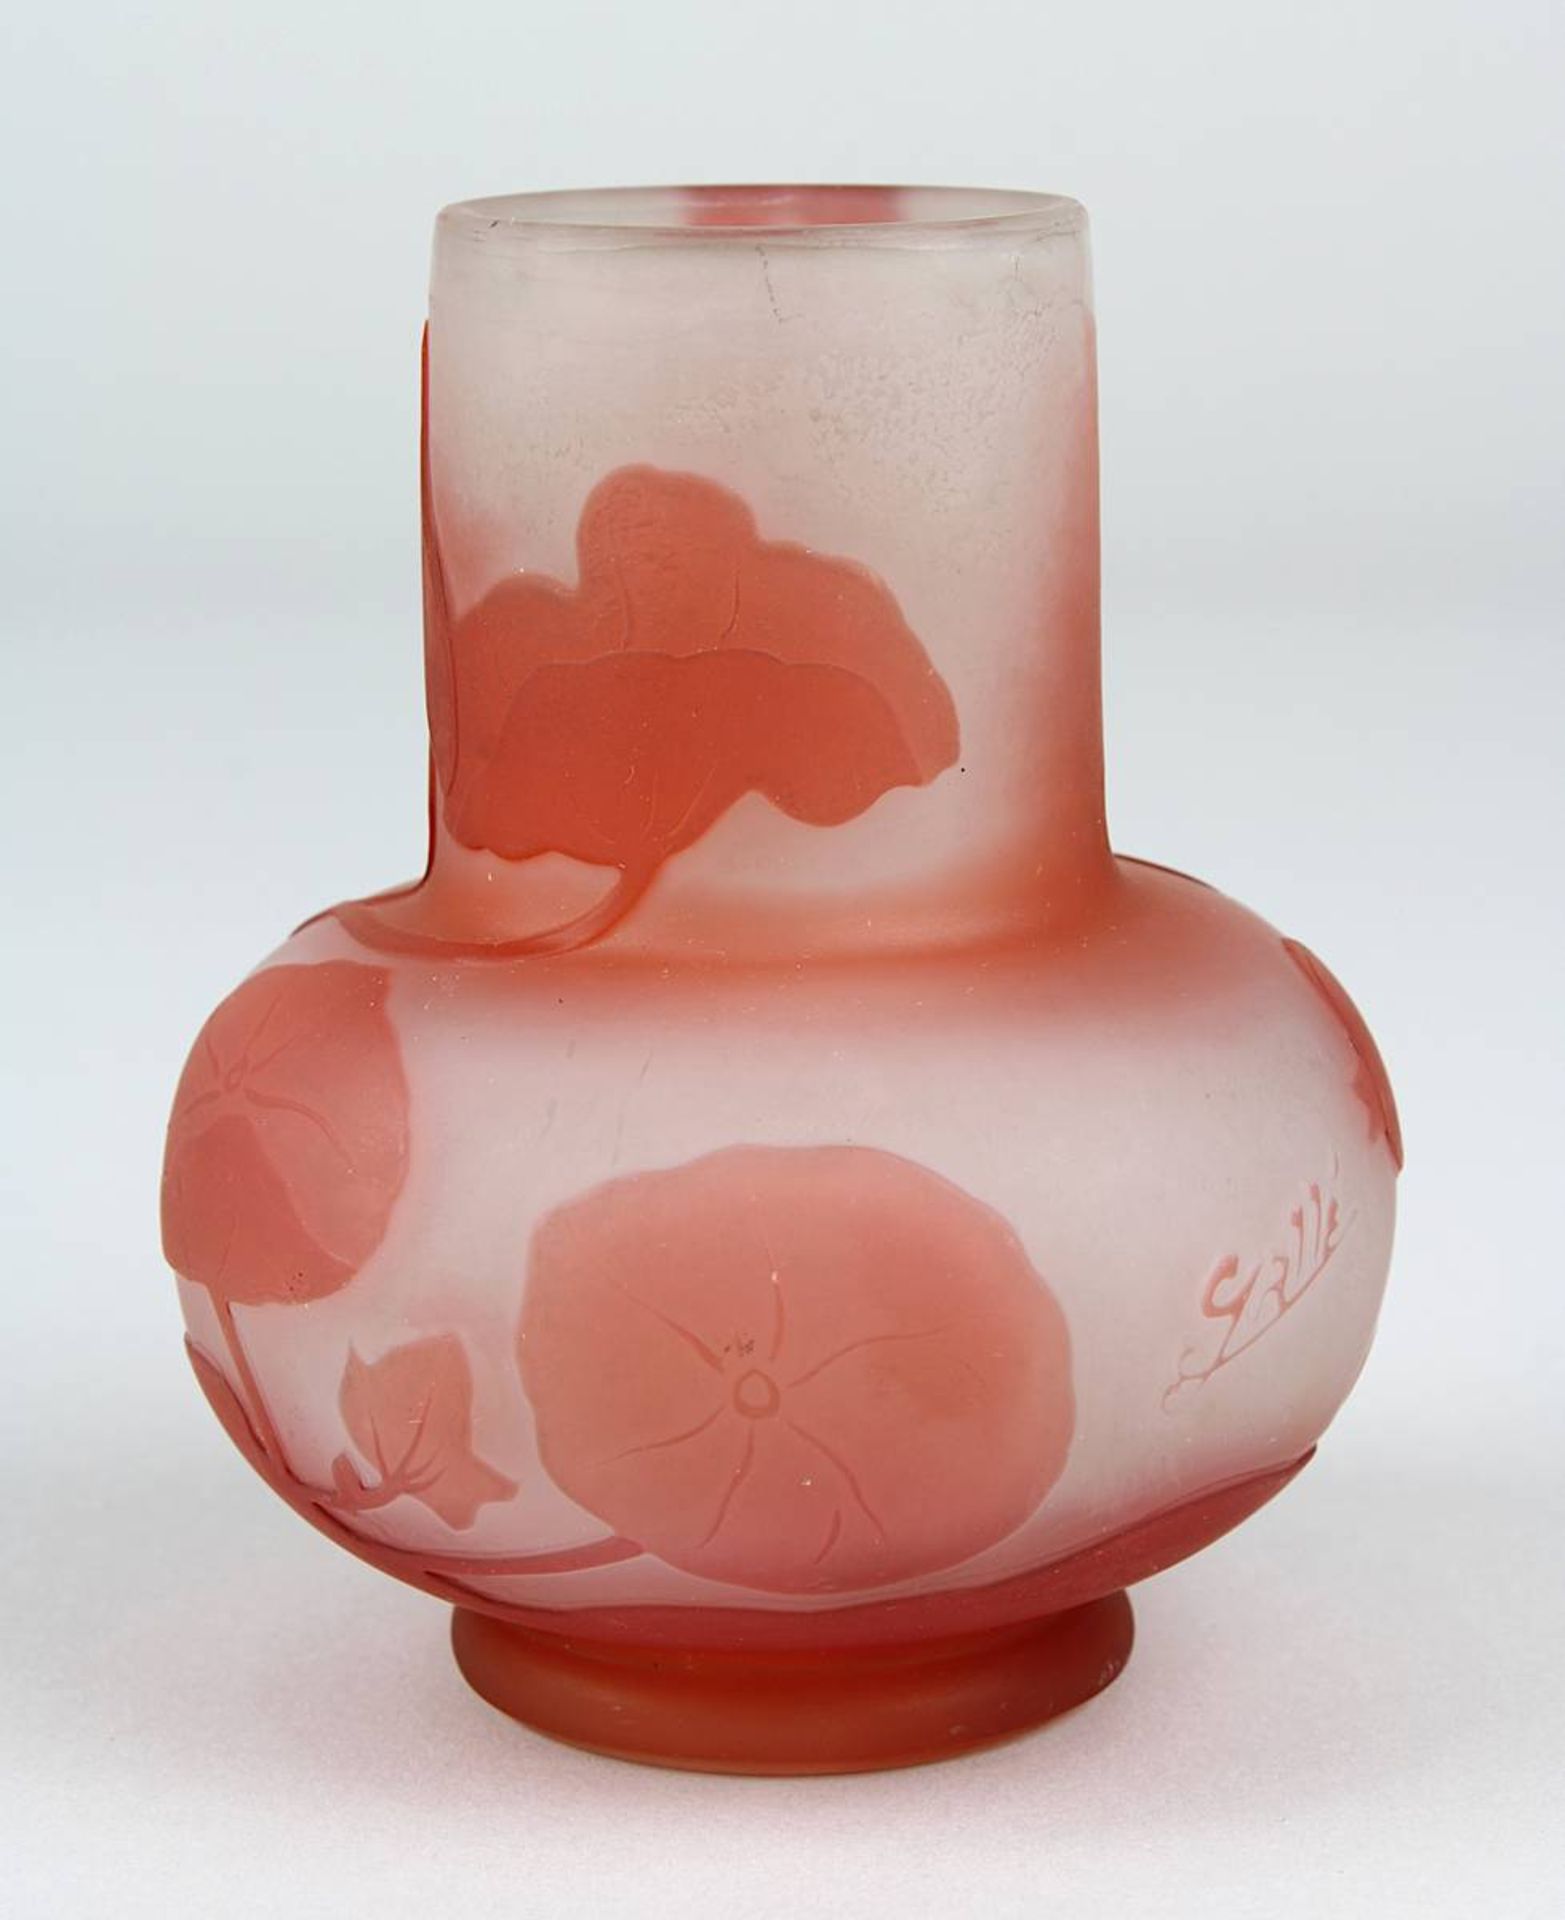 Gallé Miniatur-Jugendstil-Vase mit Windenmotiv, Nancy um 1920, matt geätzter Klarglaskorpus, - Image 2 of 4